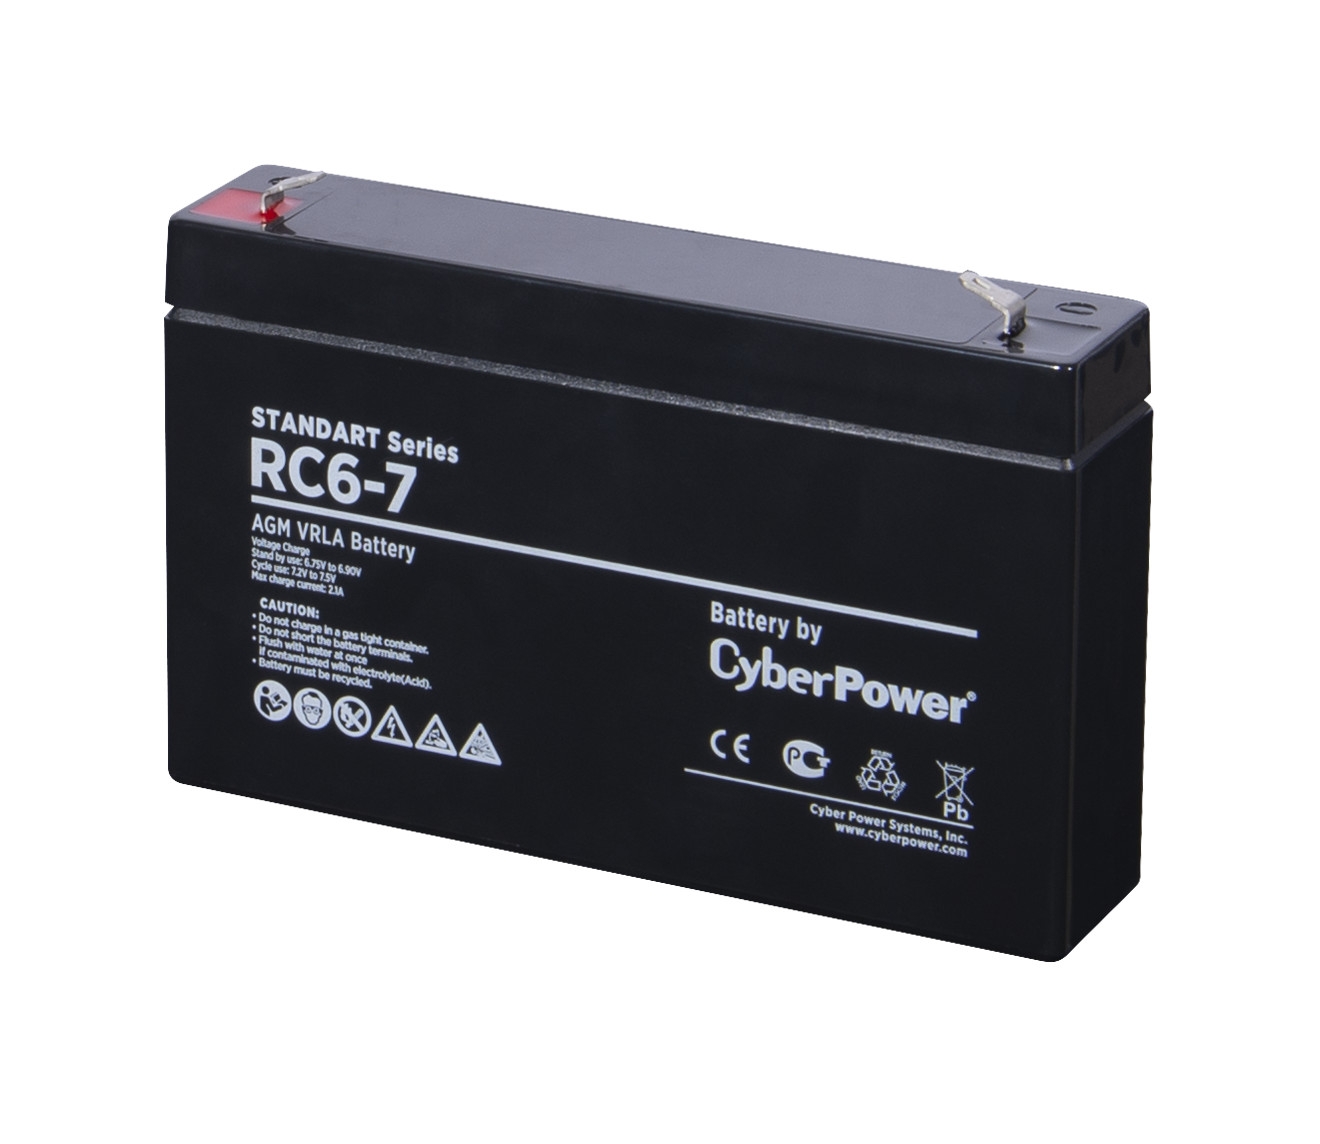 Батарея для ИБП CyberPower Standart series RC 6-7 cyberpower аккумуляторная батарея ss rс 6 4 5 6 в 4 5 ач